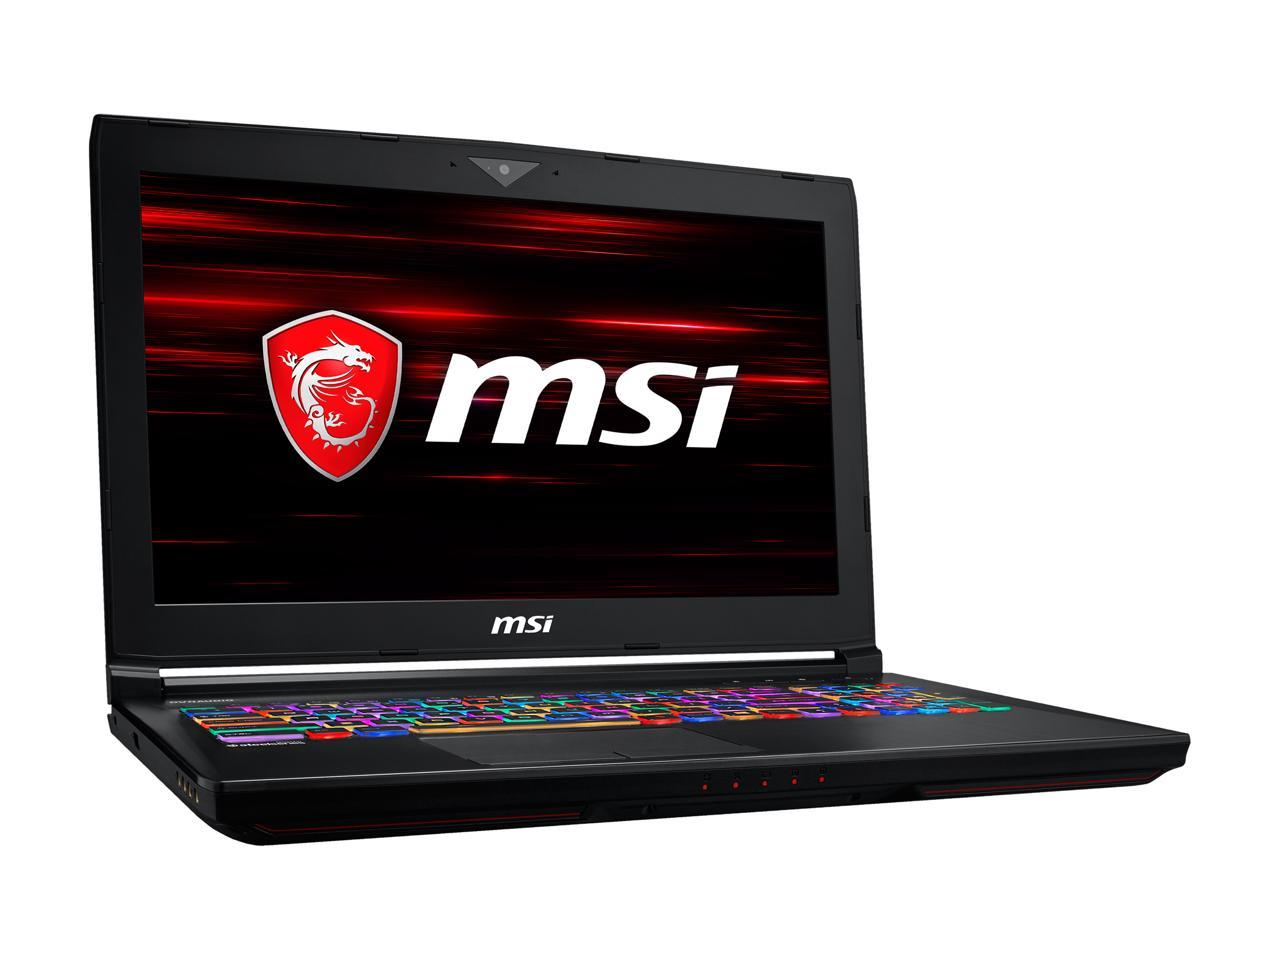 MSI GT63 TITAN-047 15.6" 120 Hz FHD GTX 1070 8 GB VRAM i7-8750H 16 GB Memory 256 GB NVMe SSD 1TB HDD Windows 10 Pro 64-Bit Gaming Laptop